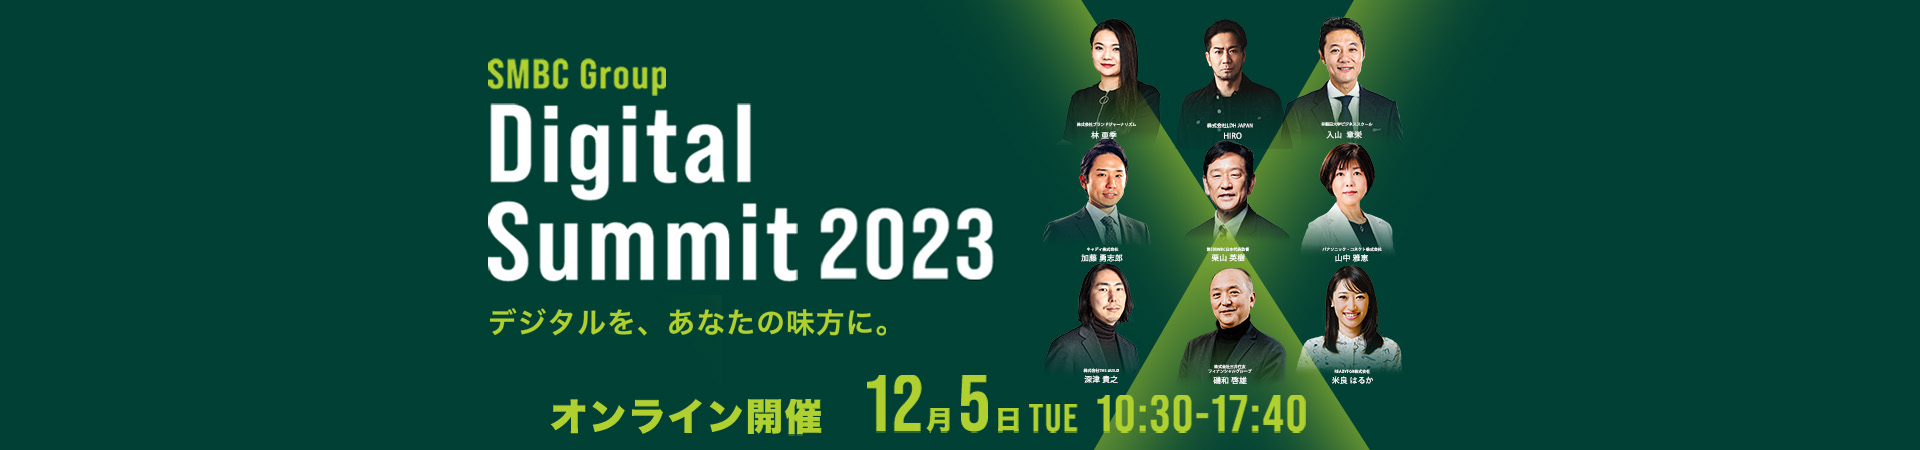 Digital Summit 2023